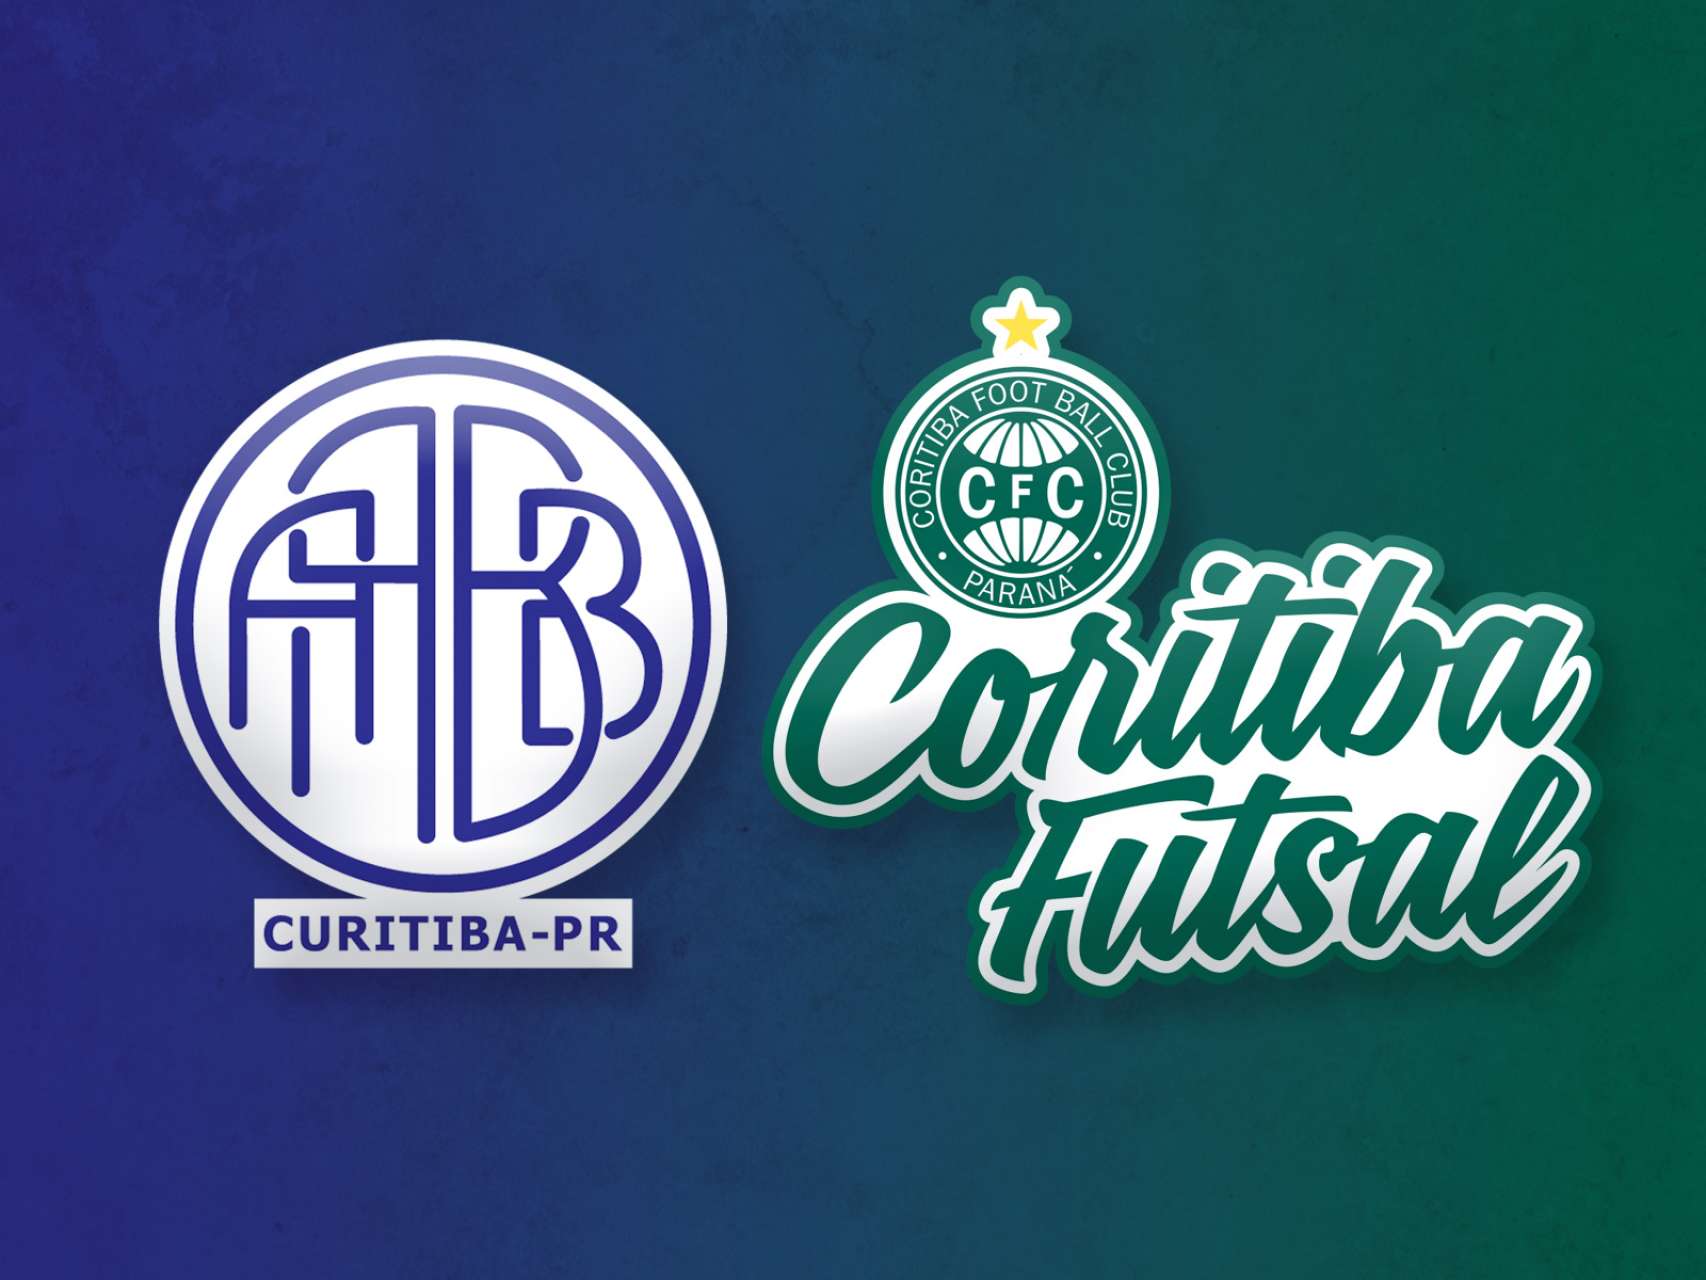 Coritiba/AABB Futsal estreia com bons reultados